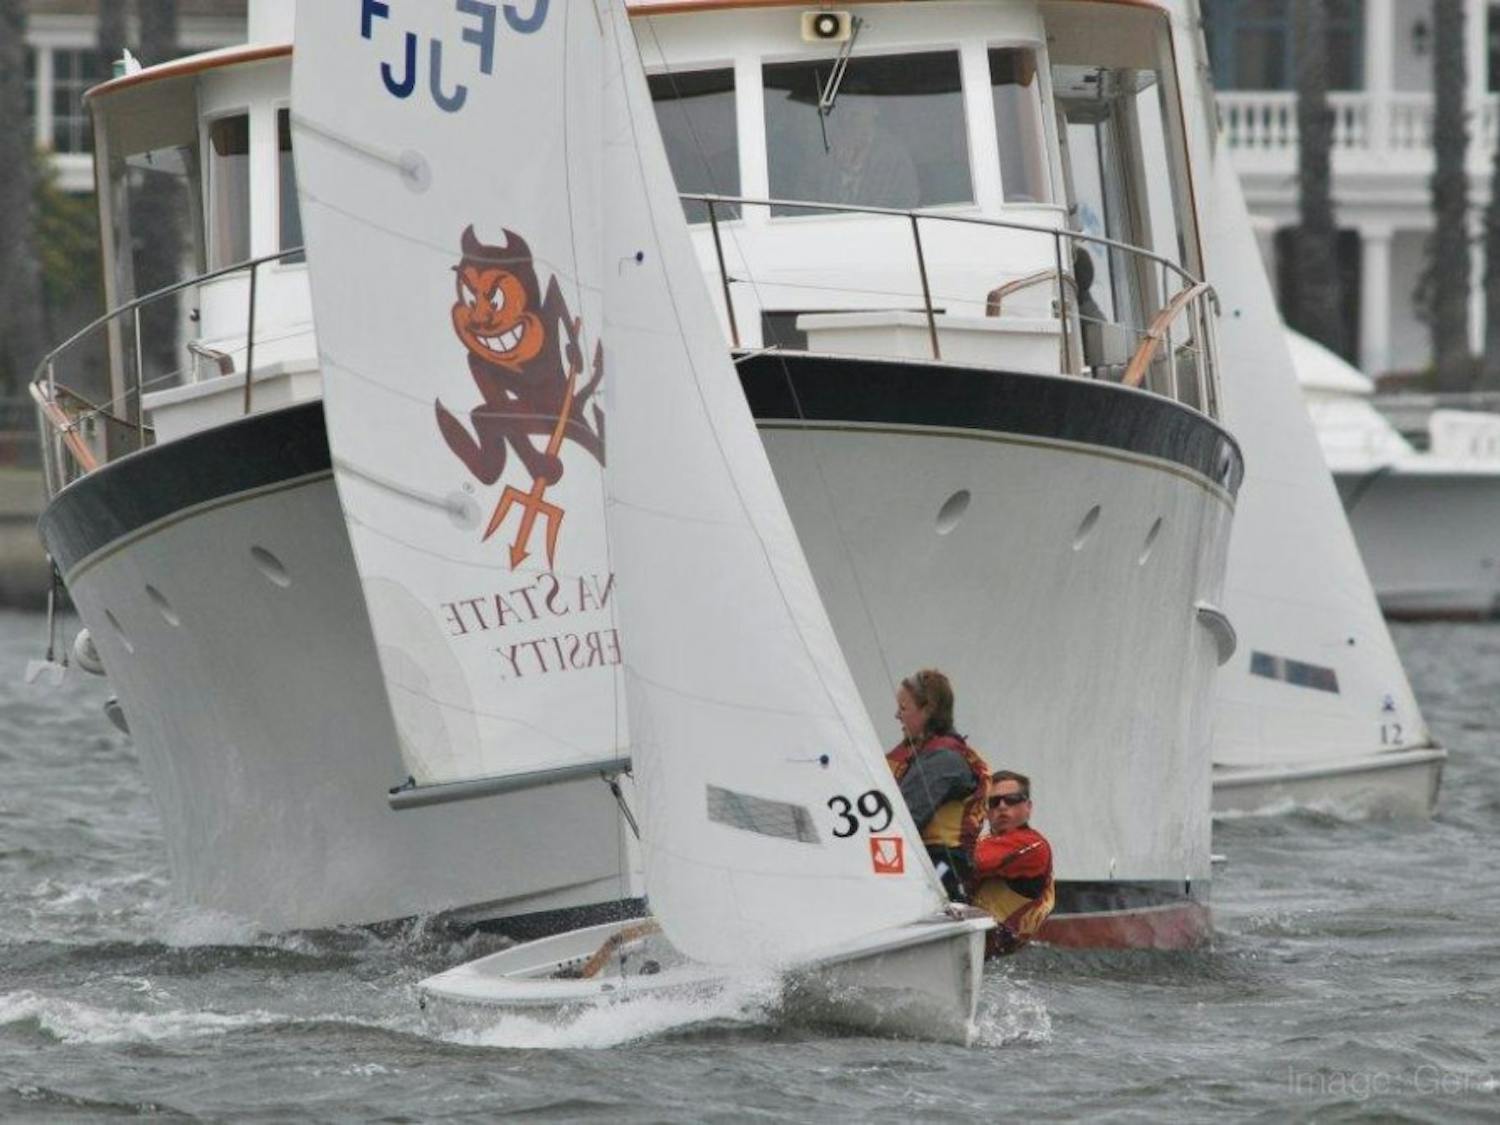 Sparky adorns the team's sail. Photo courtesy of the sailing club.